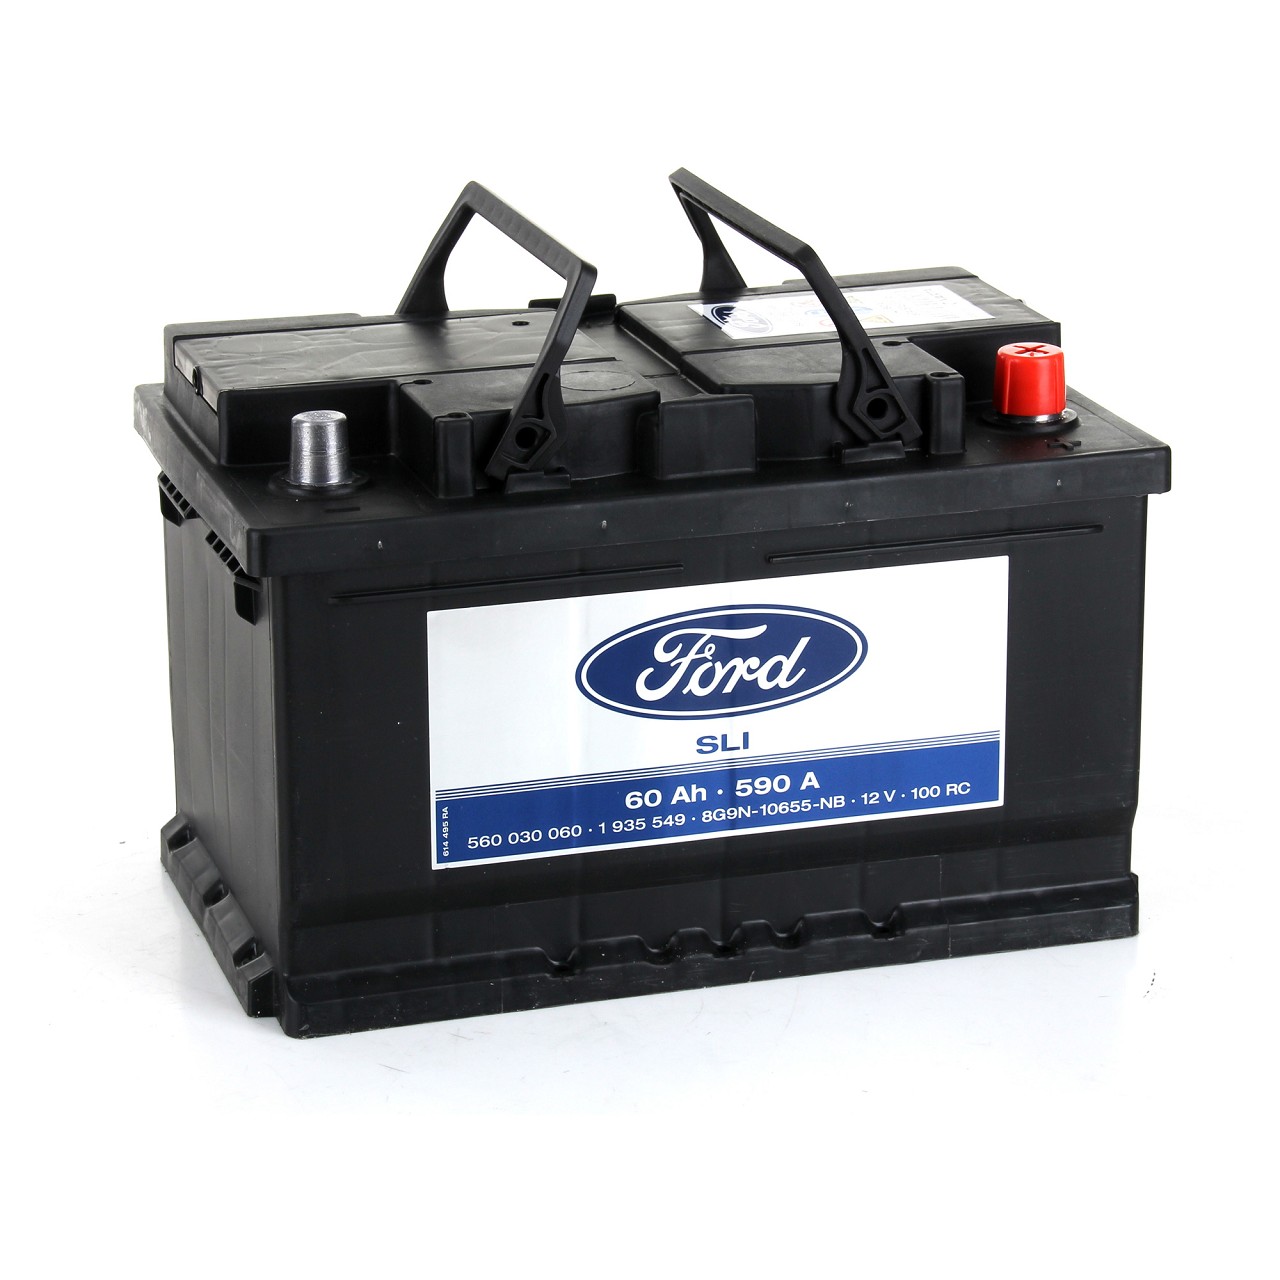 Original FORD Autobatterien - 1 935 549